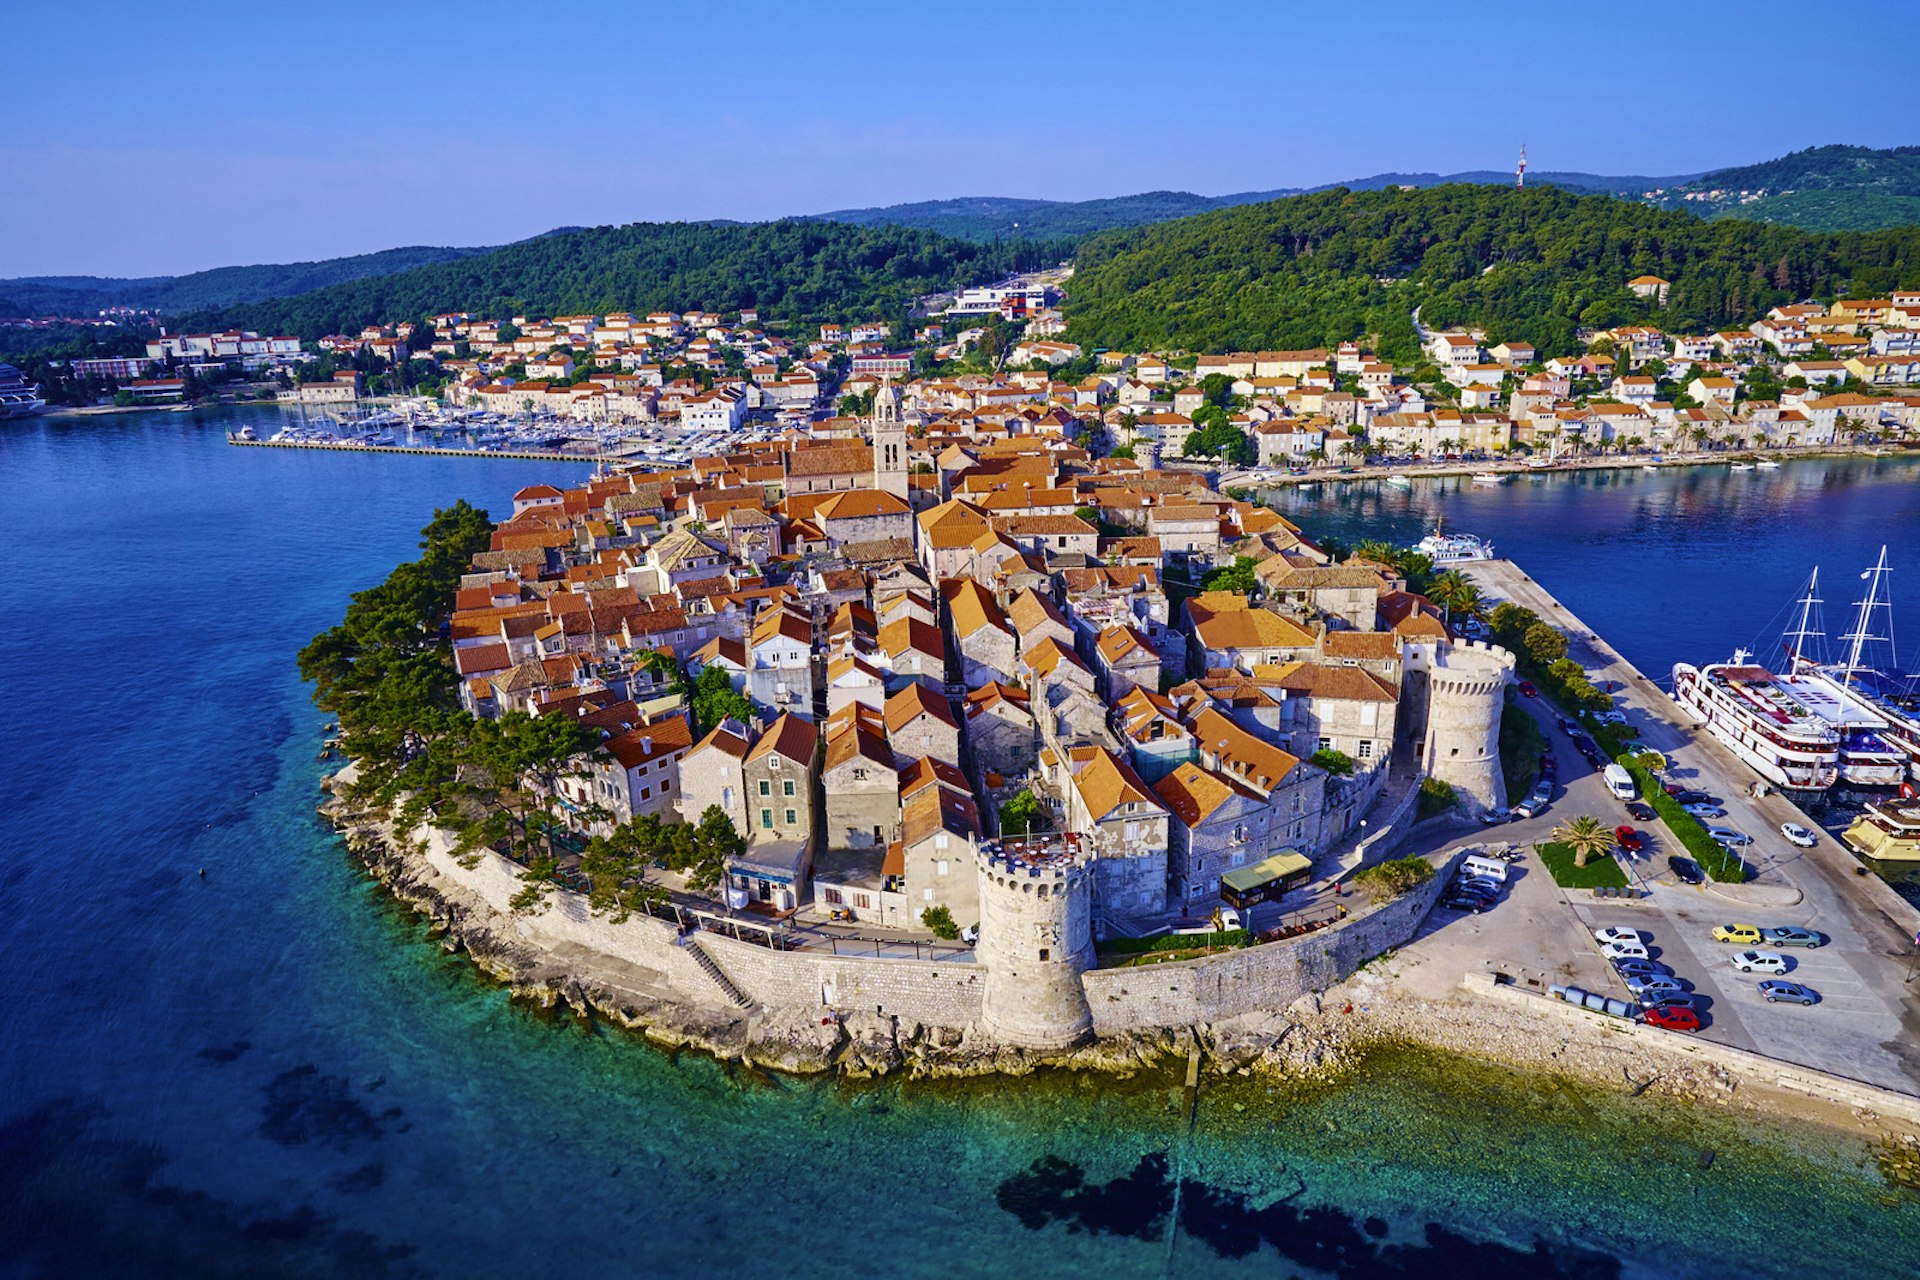 Korčula's beautiful walled old town